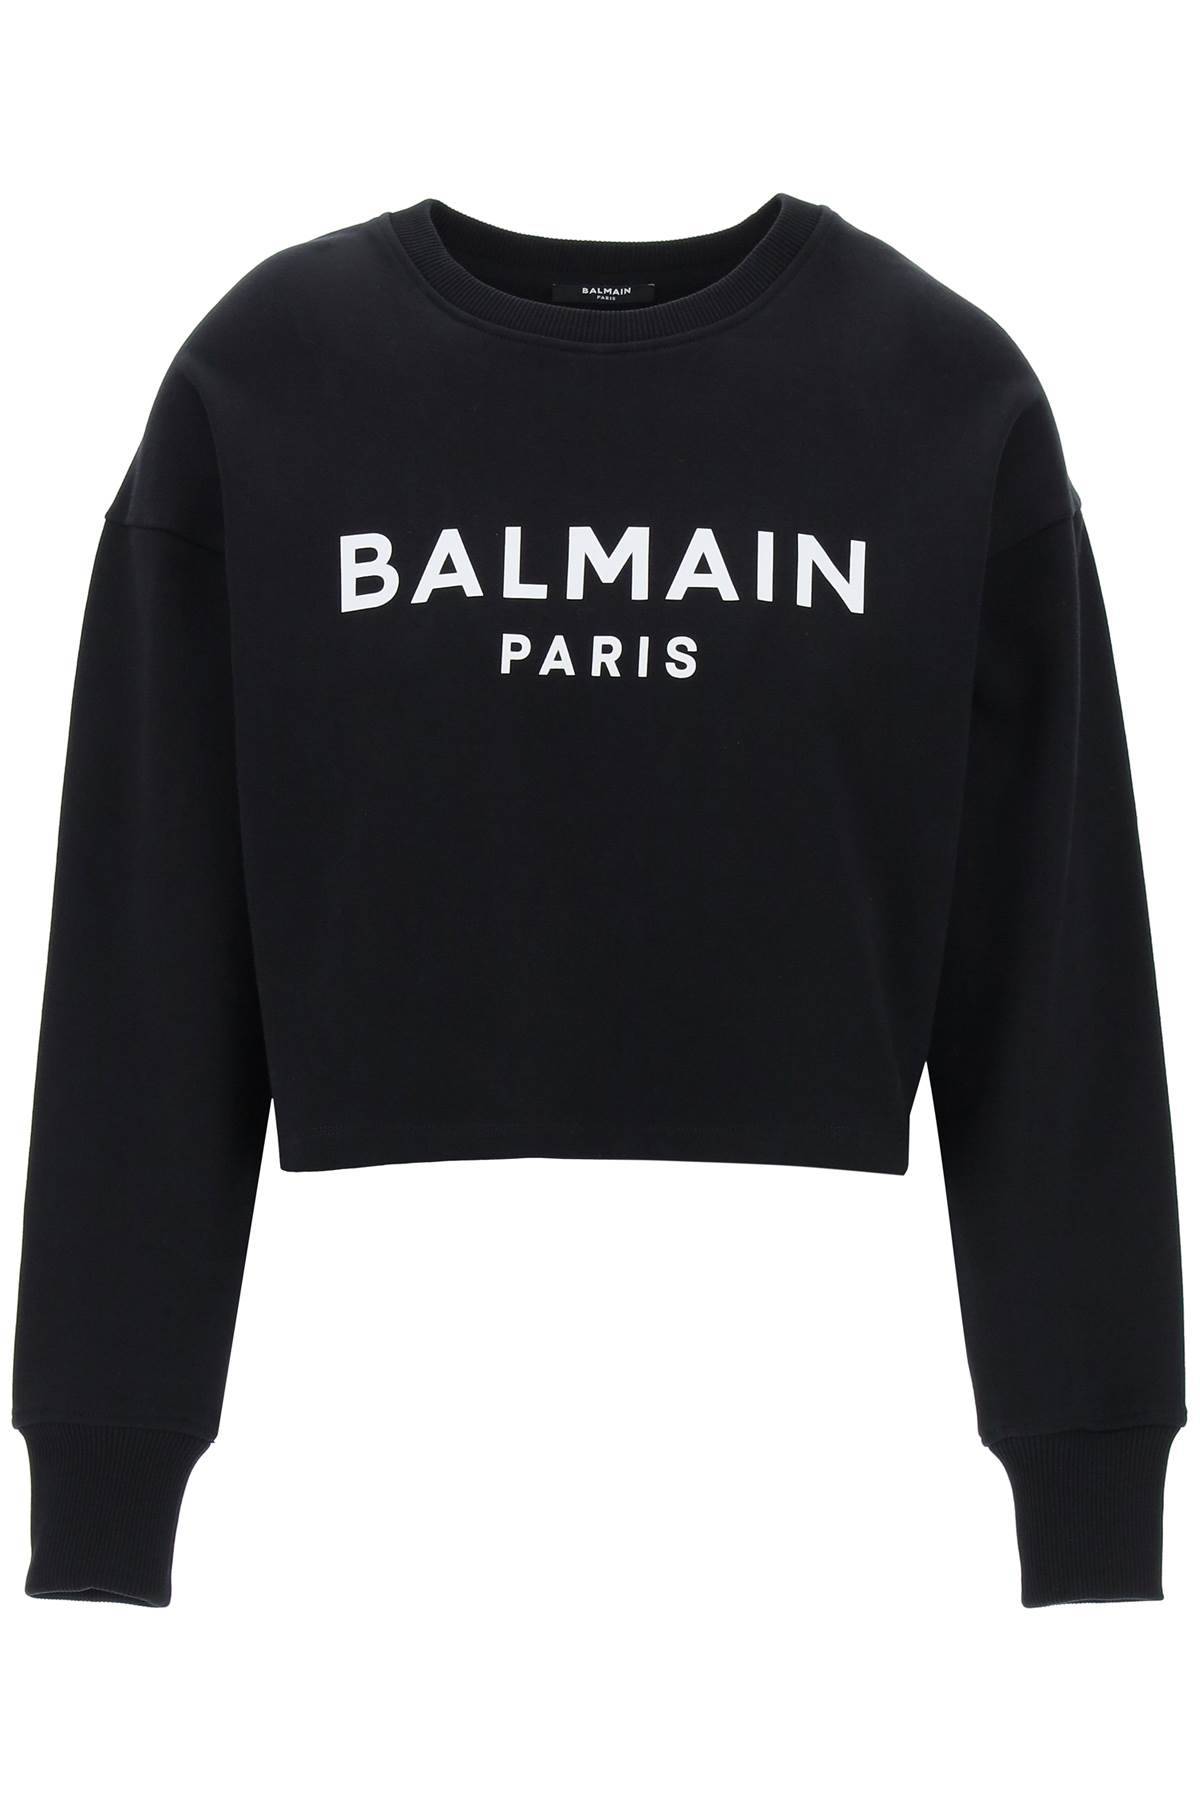 Balmain BALMAIN cropped sweatshirt with flocked logo